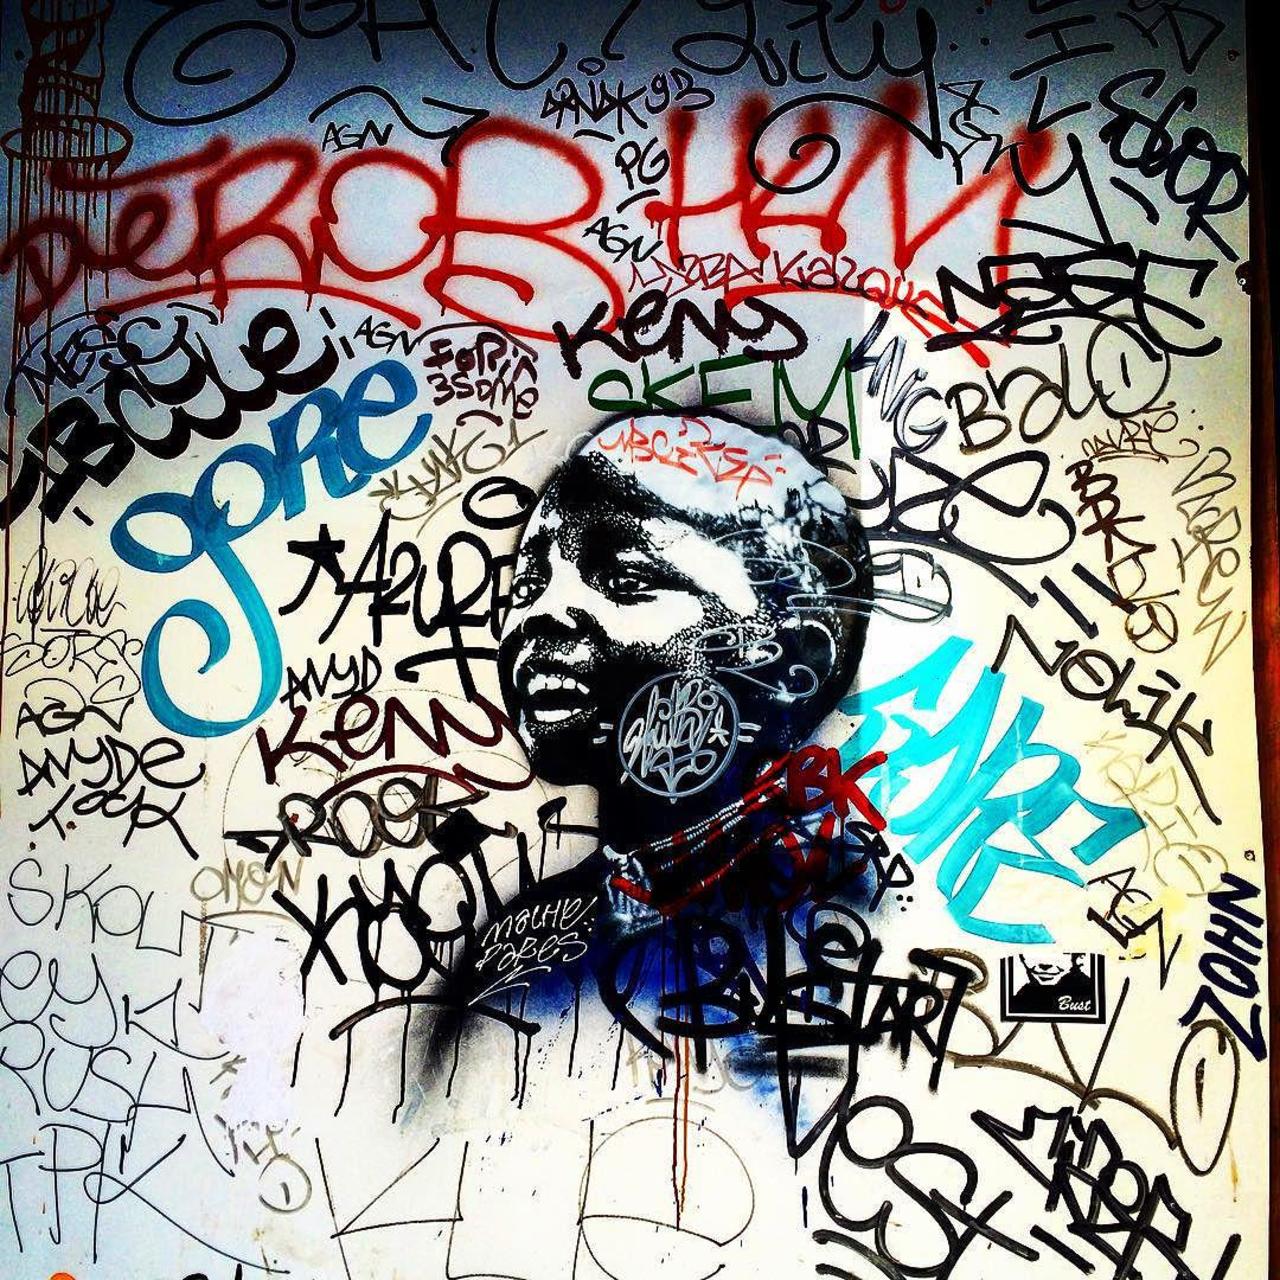 circumjacent_fr: #Paris #graffiti photo by tamaria77 http://ift.tt/1FDxU5H #StreetArt http://t.co/JjphQyvPuf